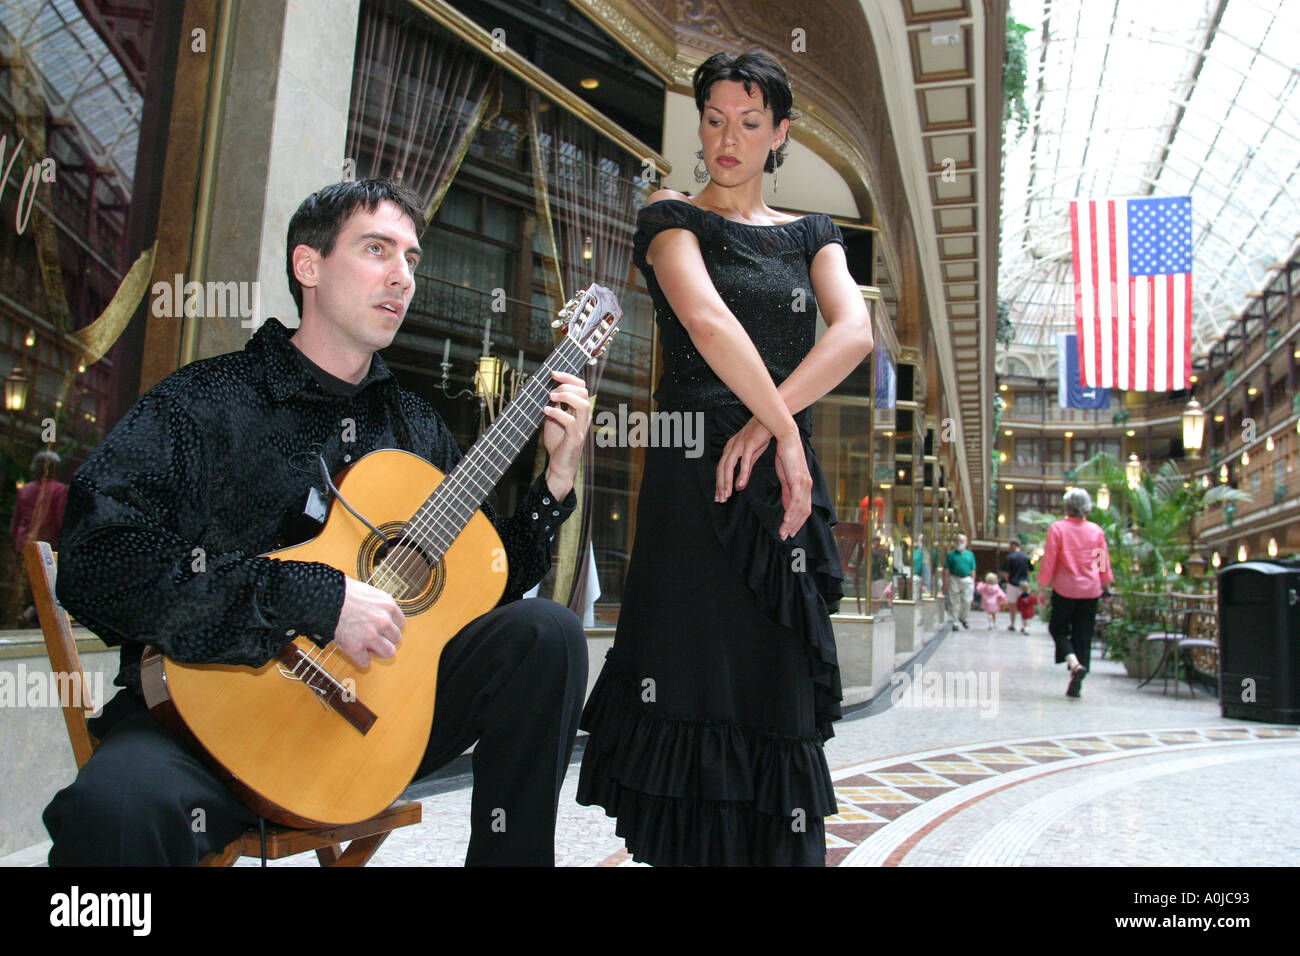 Cleveland Ohio,The Arcade,flamenco dancer,guitar,Spanish music,culture,entertainment,performance,show,OH0611040022 Stock Photo